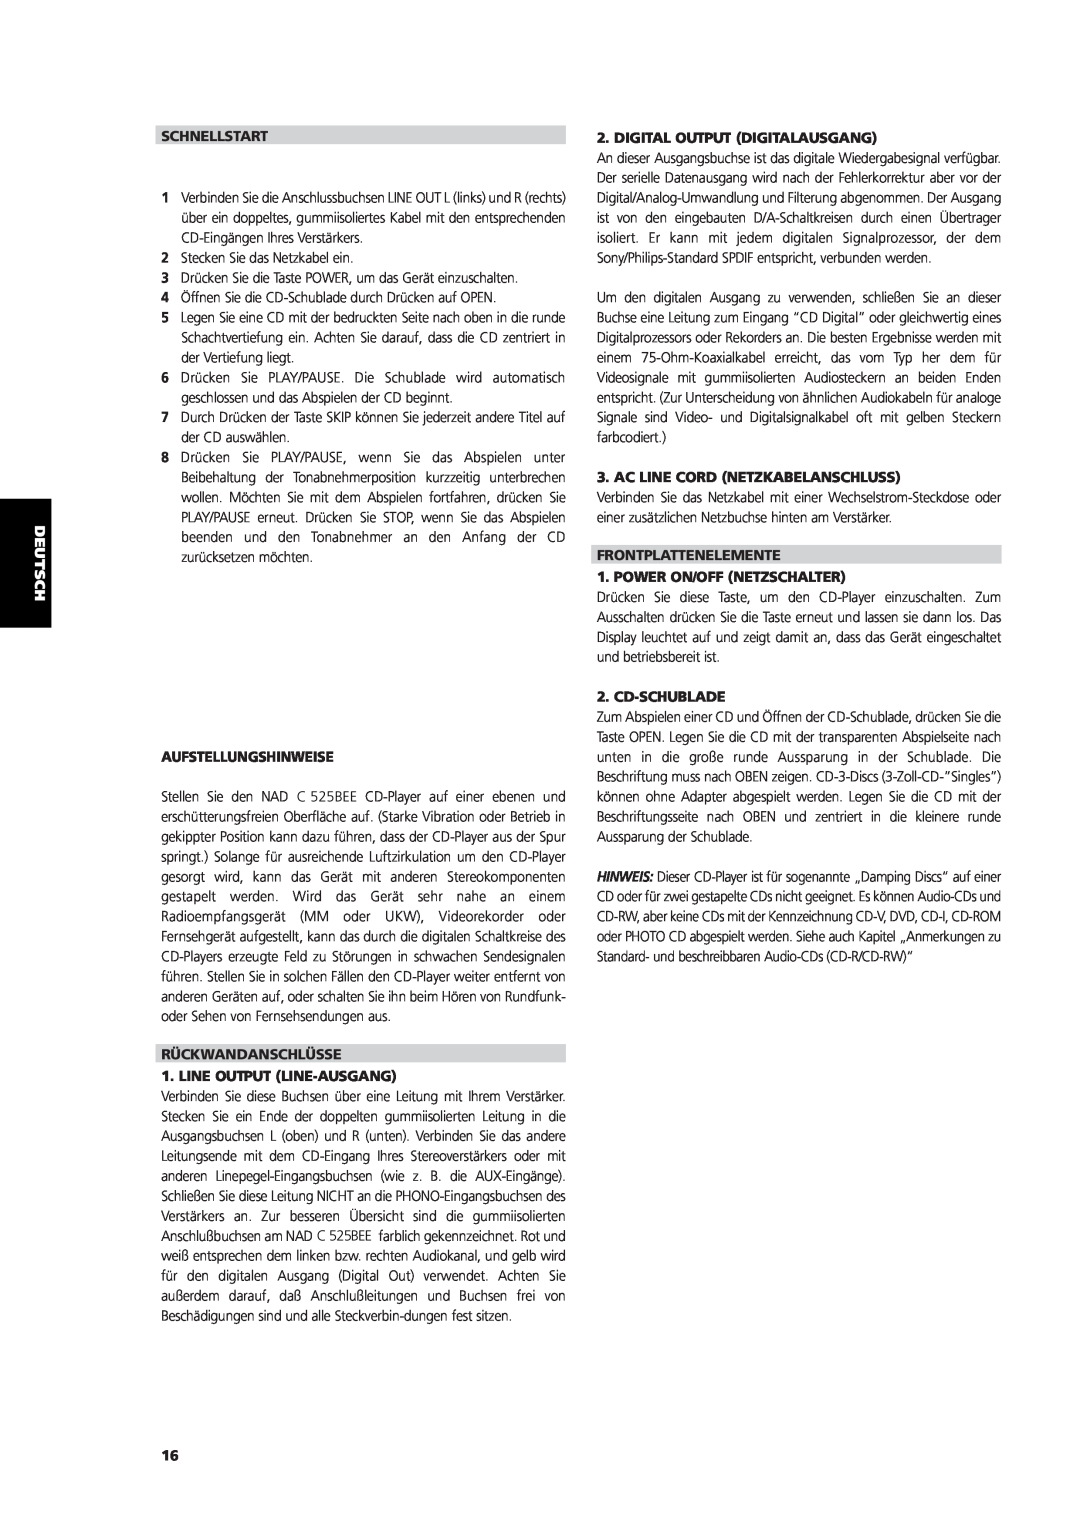 NAD C 525BEE owner manual Schnellstart, Aufstellungshinweise, RÜCKWANDANSCHLÜSSE 1. LINE OUTPUT LINE-AUSGANG, Cd-Schublade 